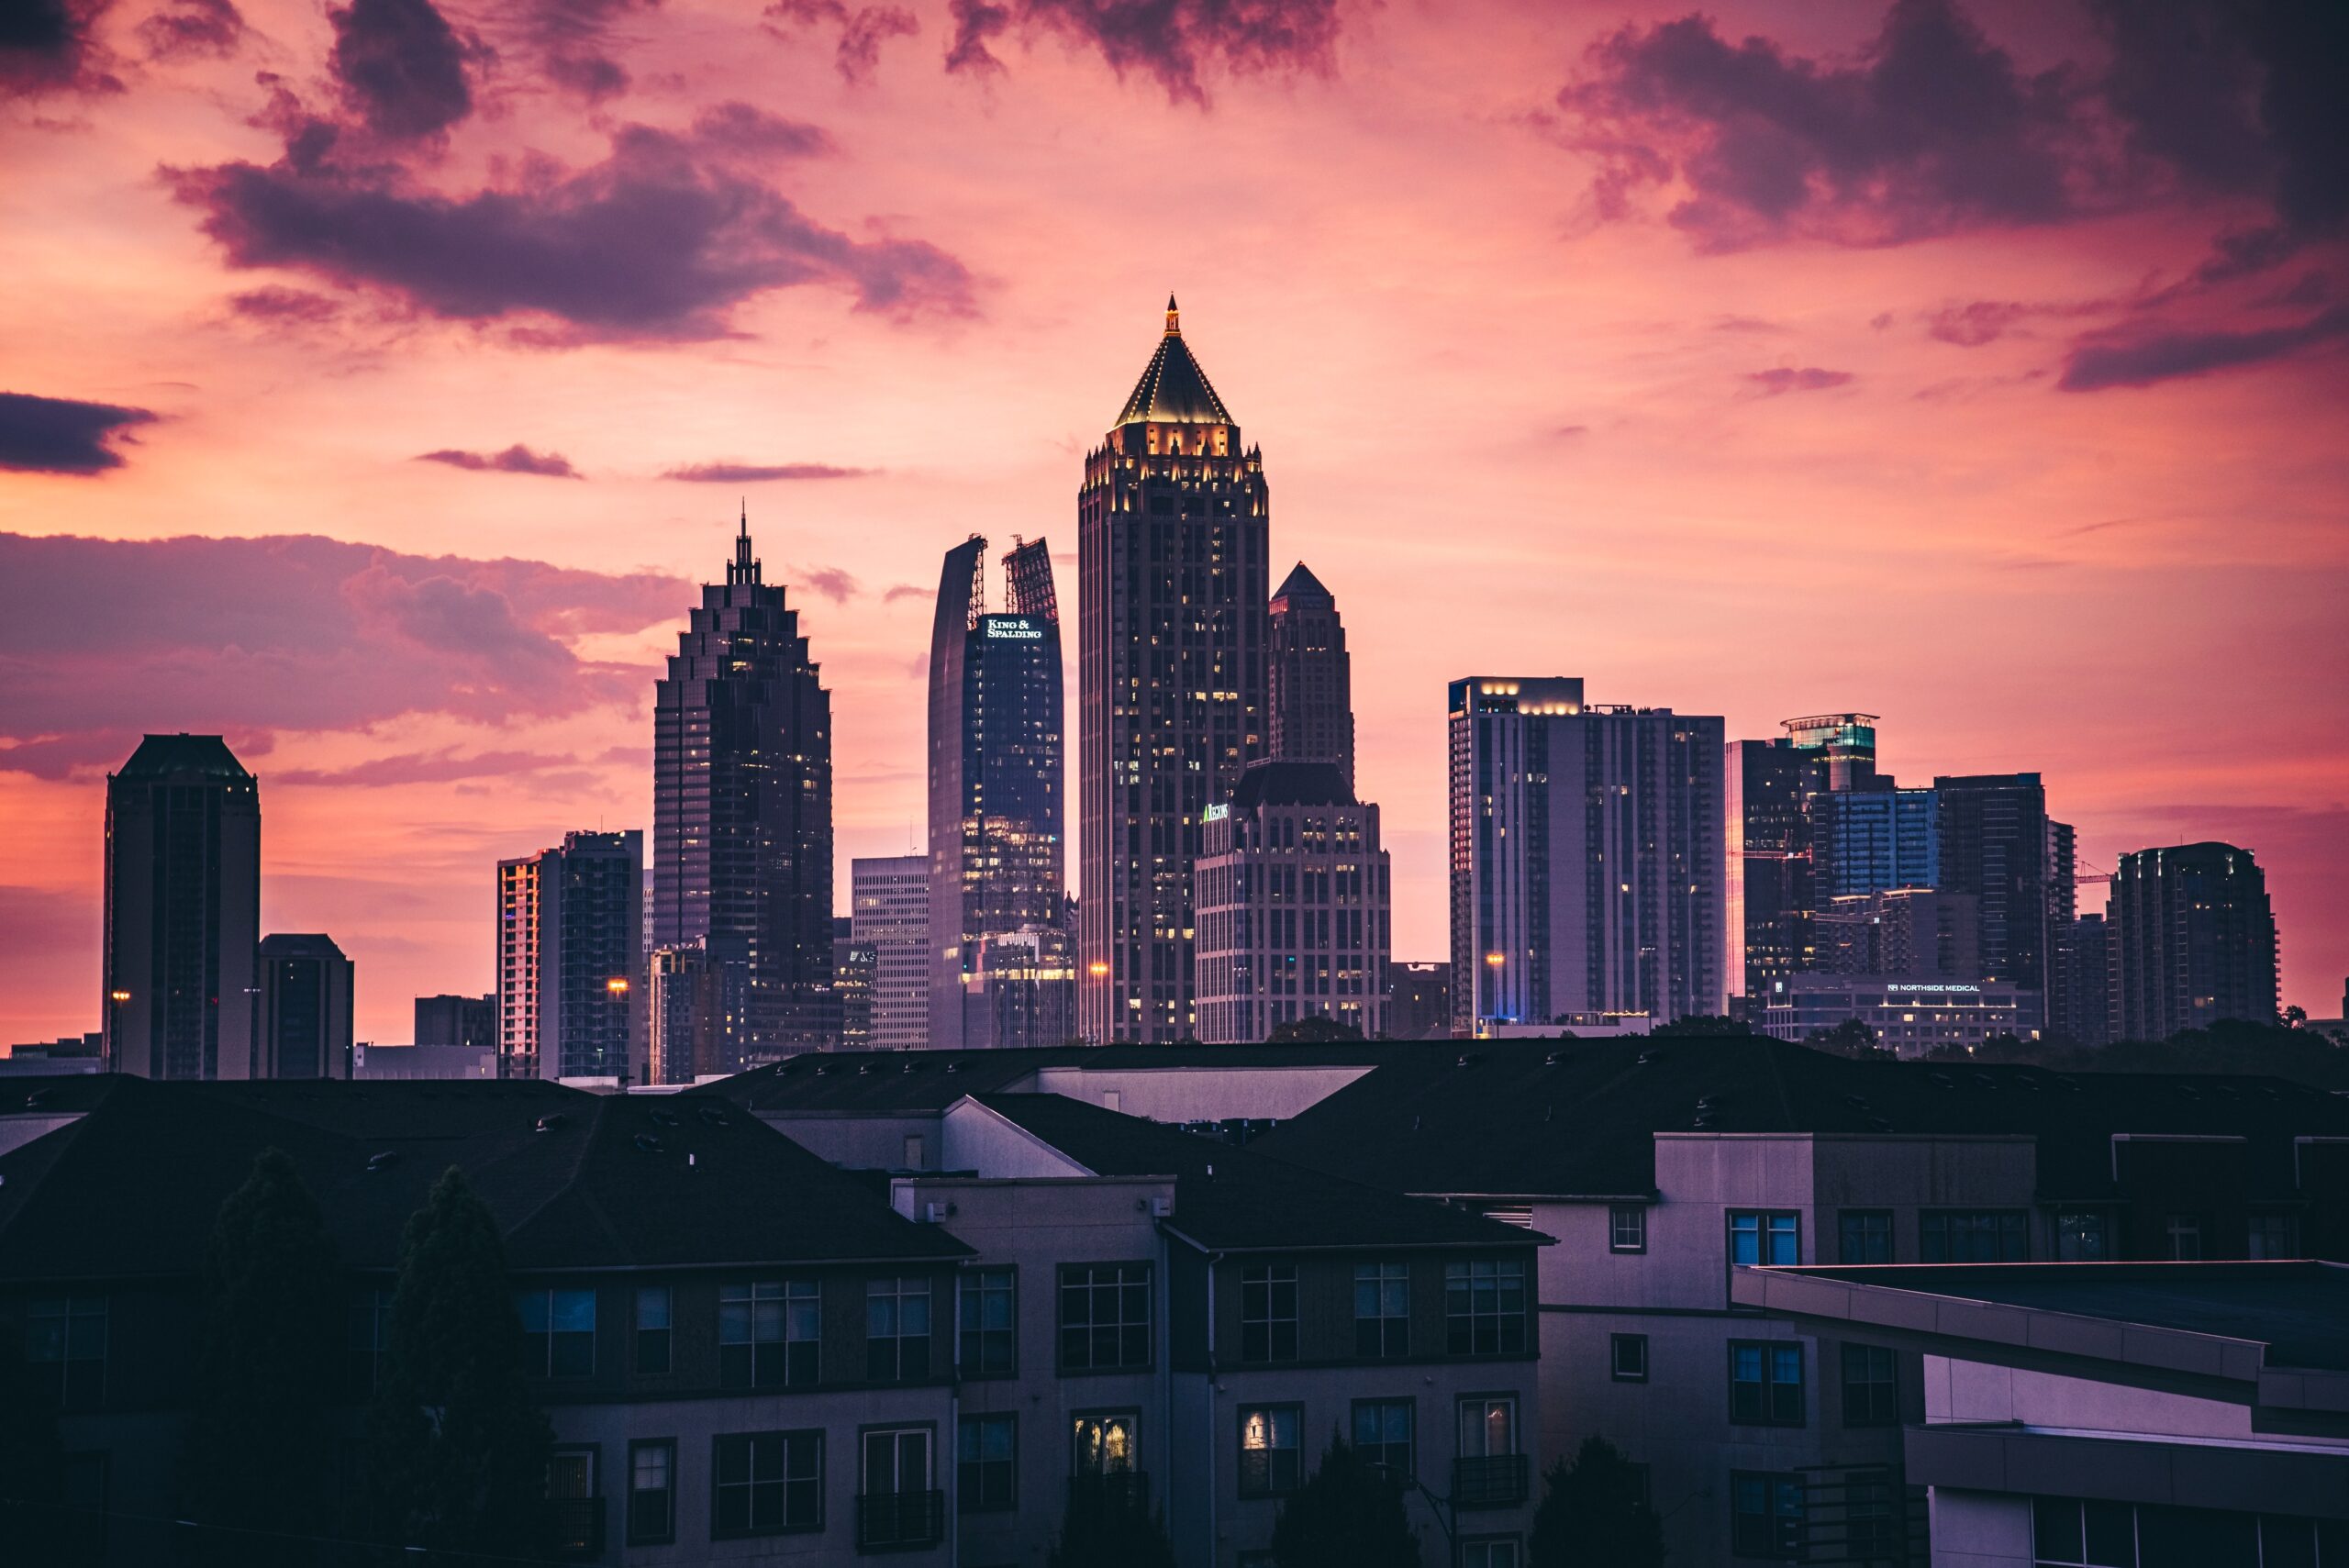 city of Atlanta, Georgia at sunset